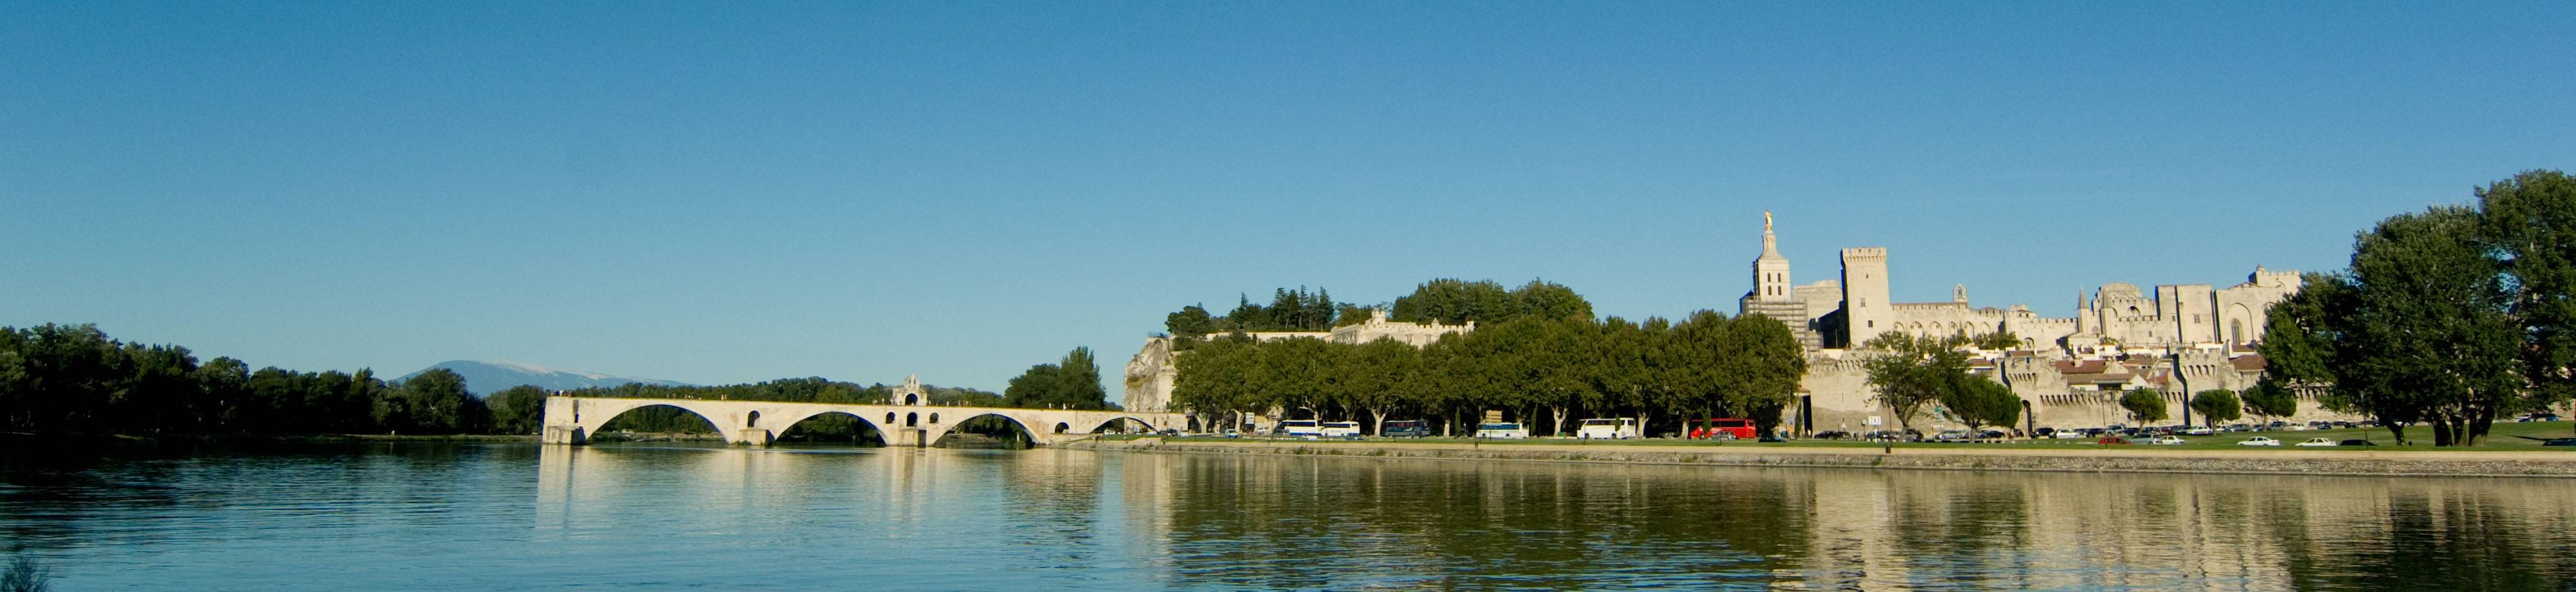 Avignon city center - Bridge of Avignon